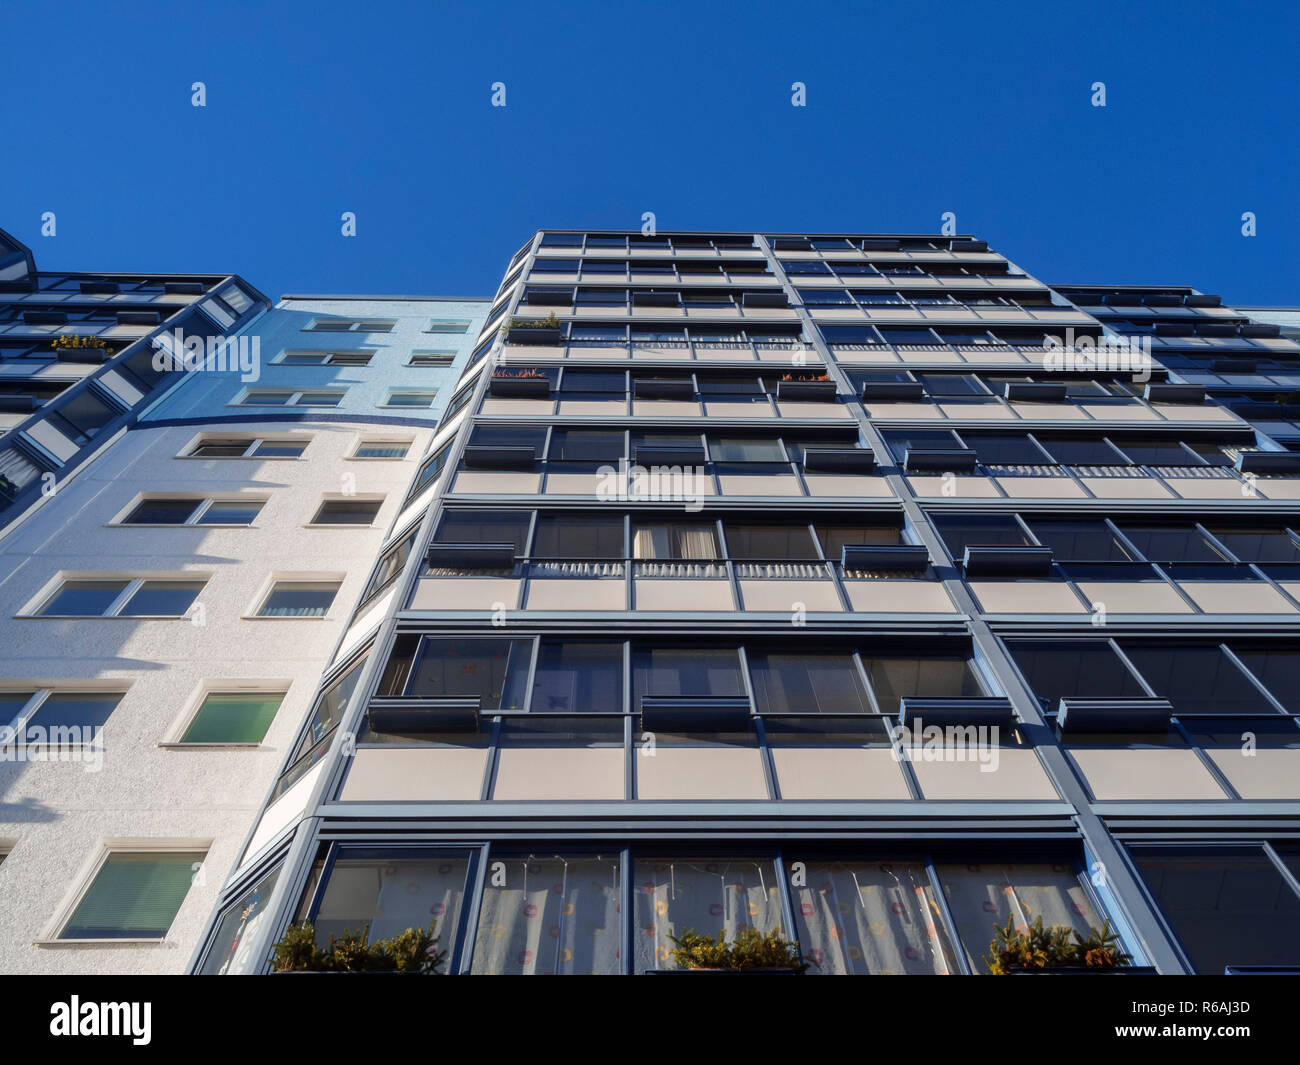 facade with glazed balconies Stock Photo